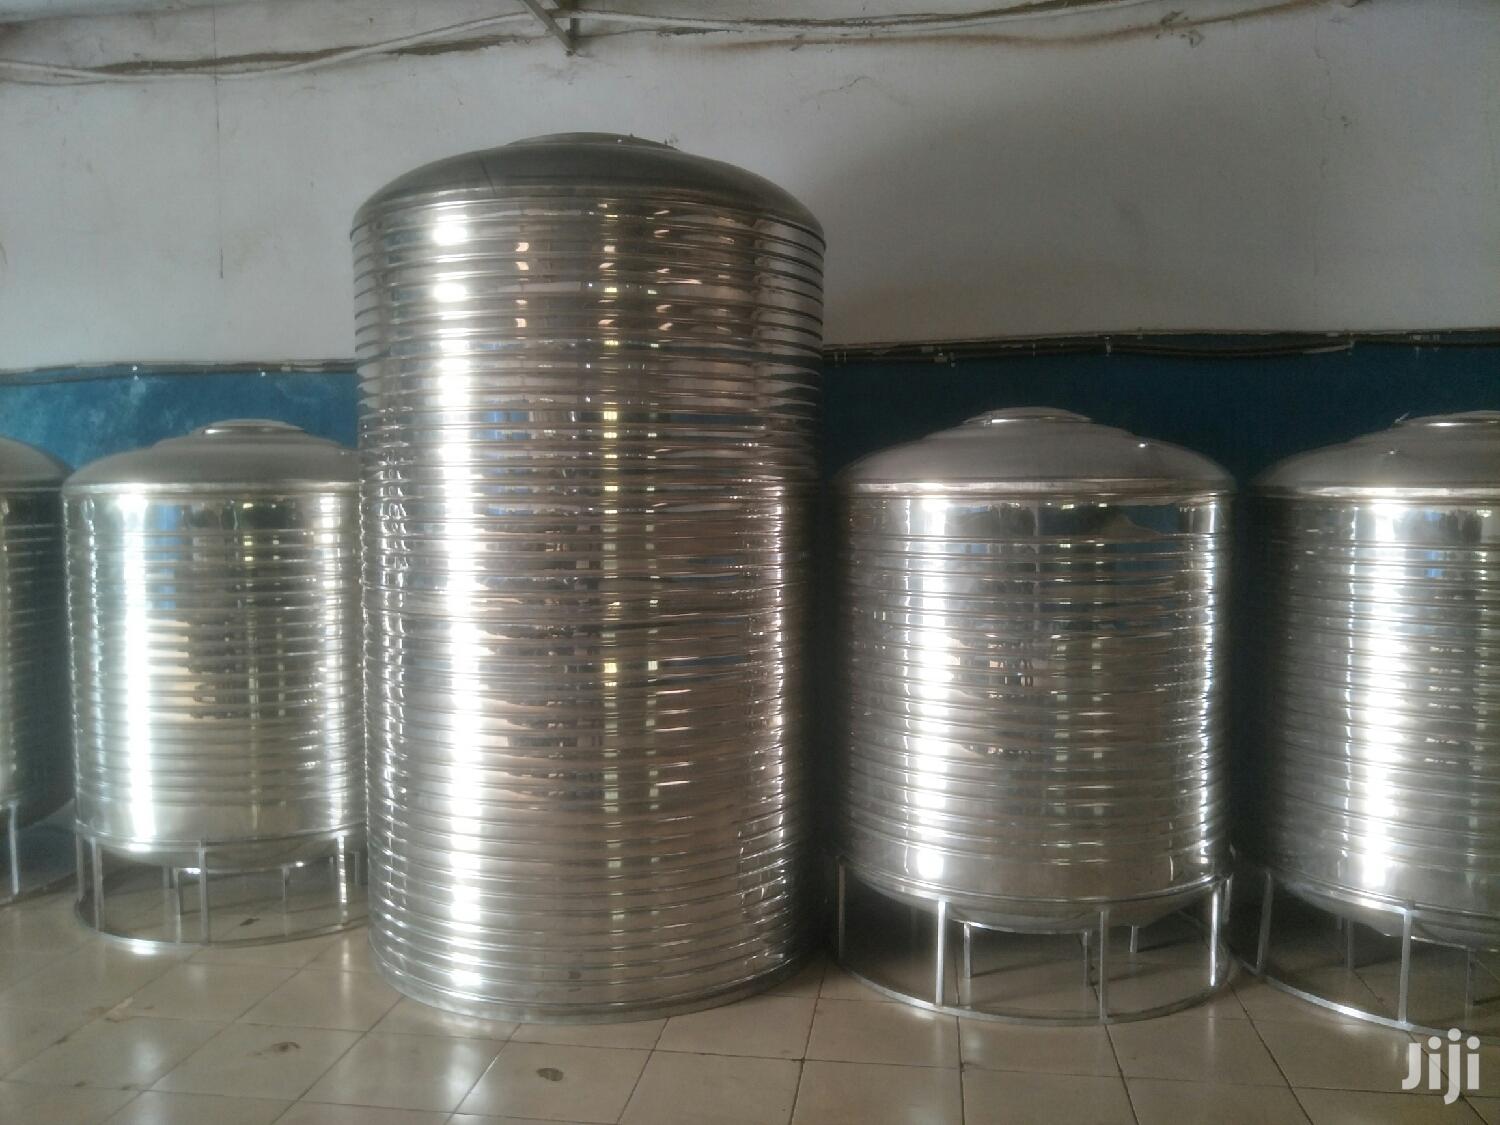 Stainless Steel Water Tanks in Kampala - Plumbing &amp; Water Supply, Hero Hamuza | Jiji.ug